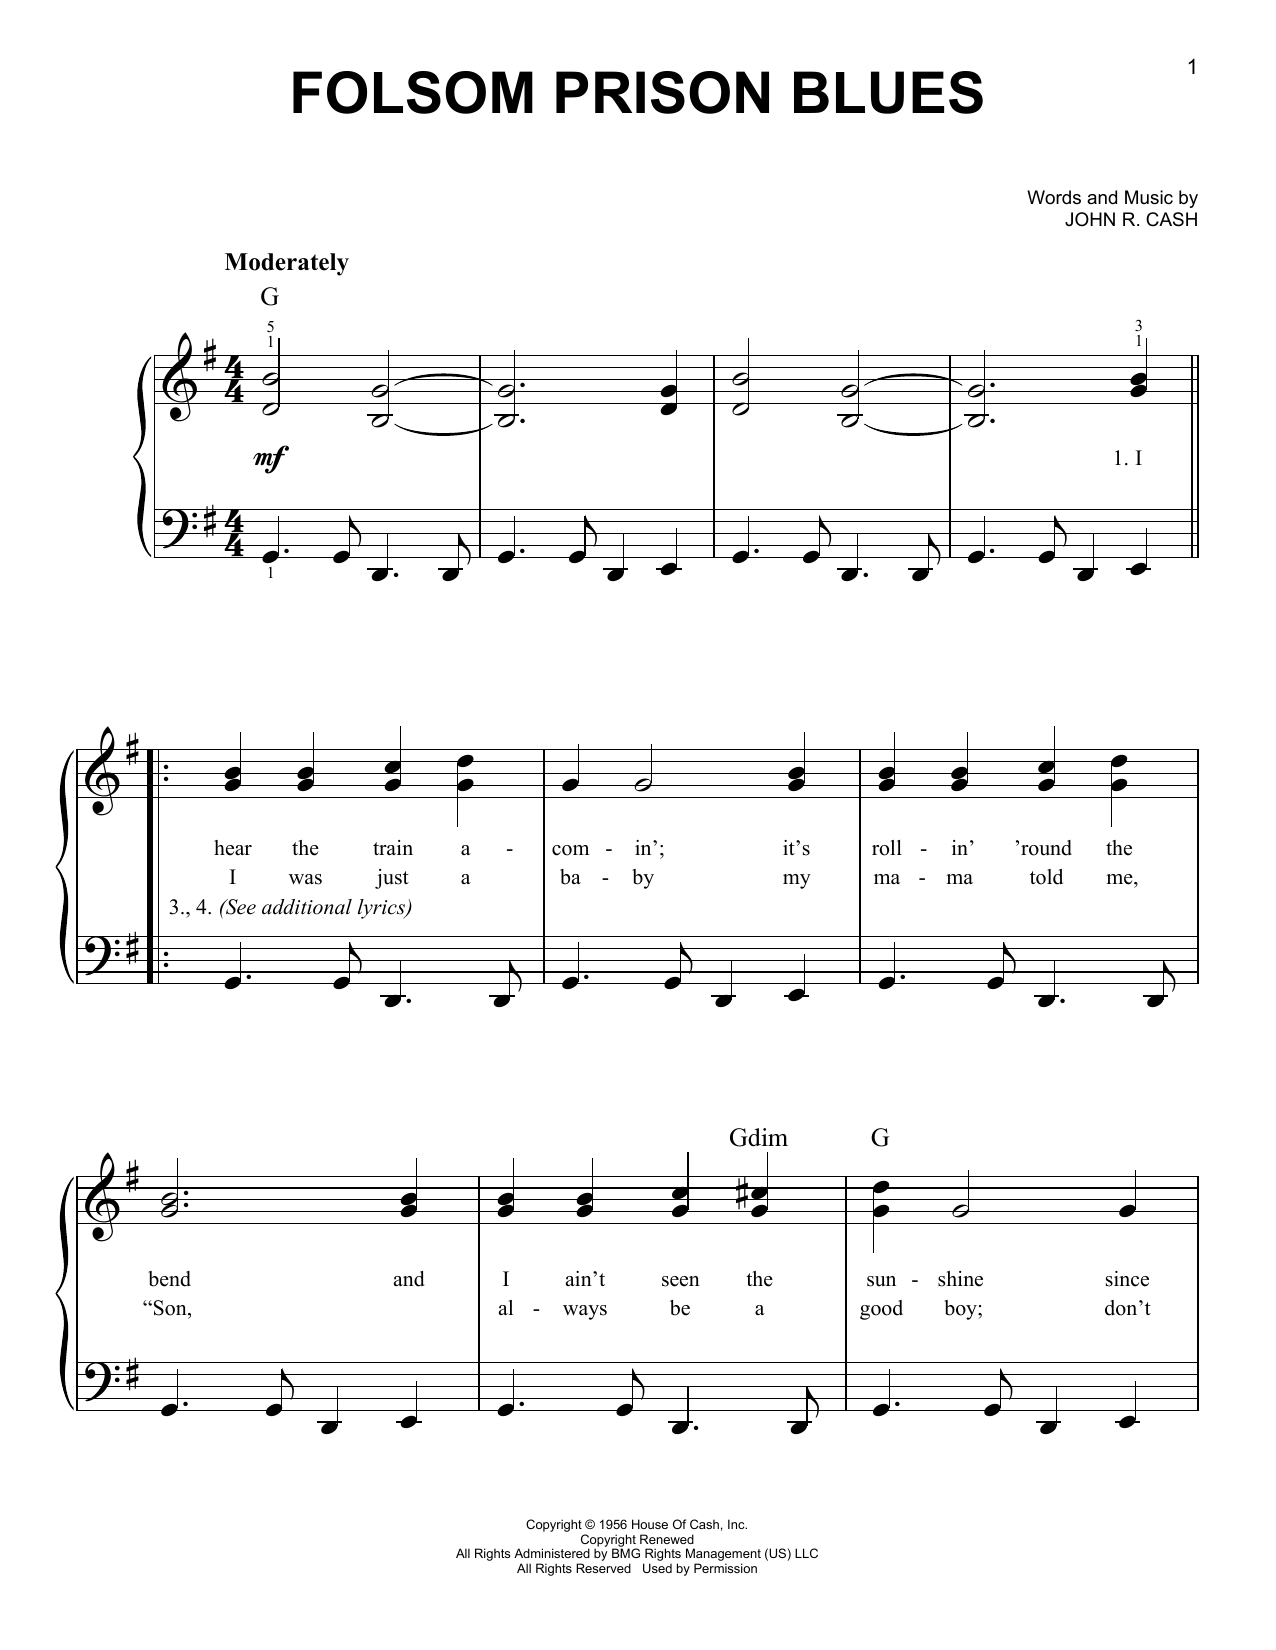 Johnny Cash Folsom Prison Blues Sheet Music Notes & Chords for Banjo Tab - Download or Print PDF